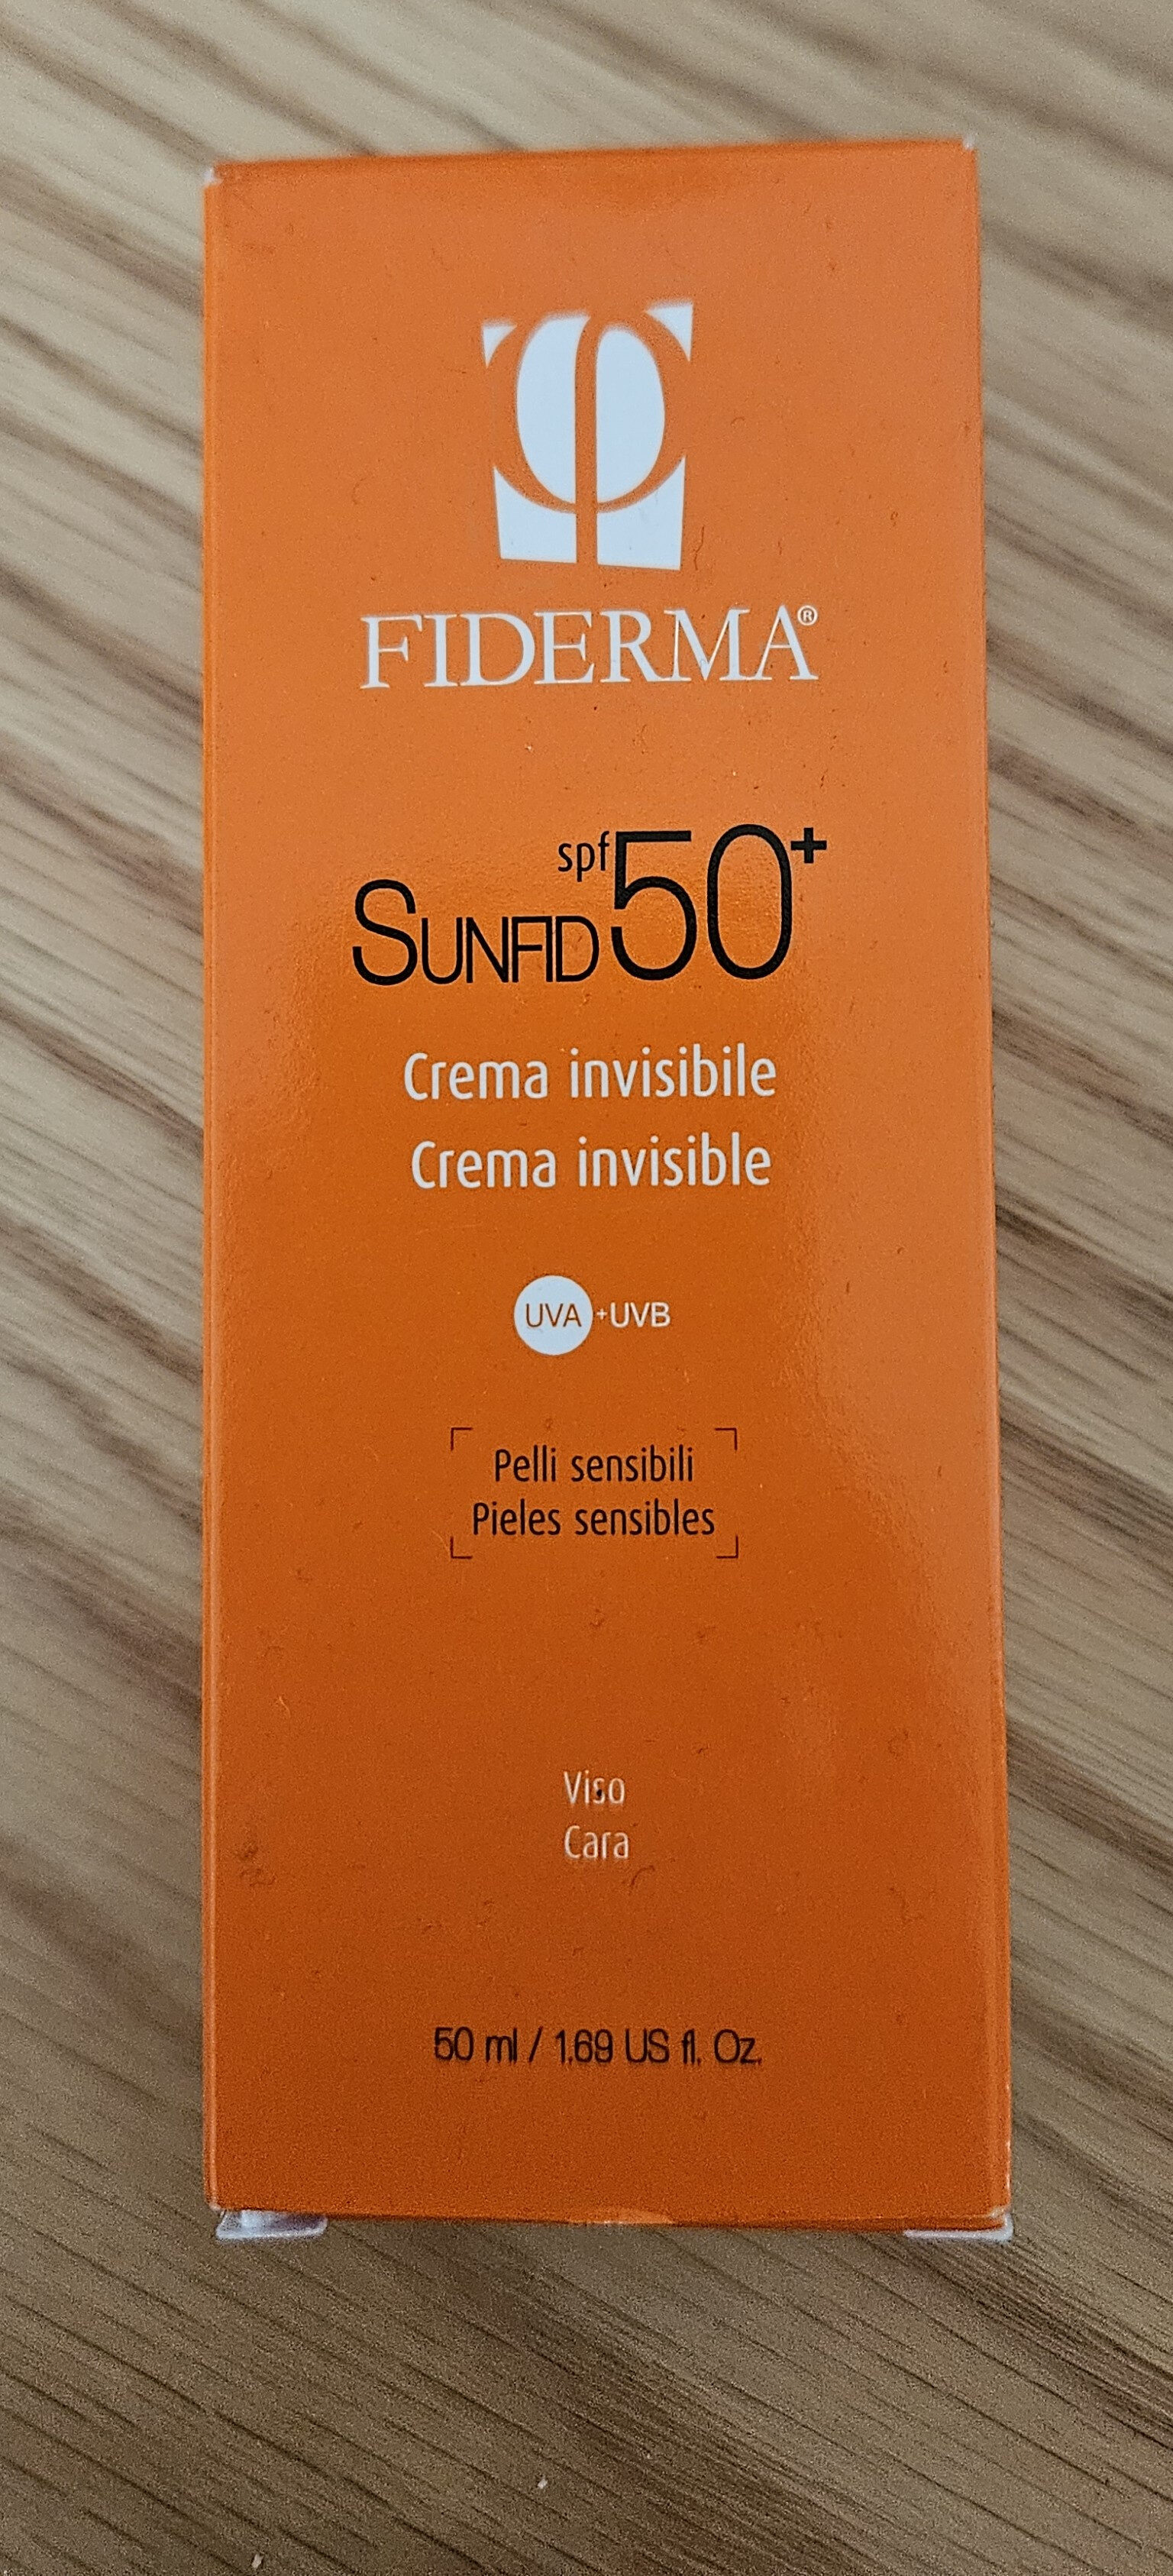 Sunfid spf50+ - Product - en